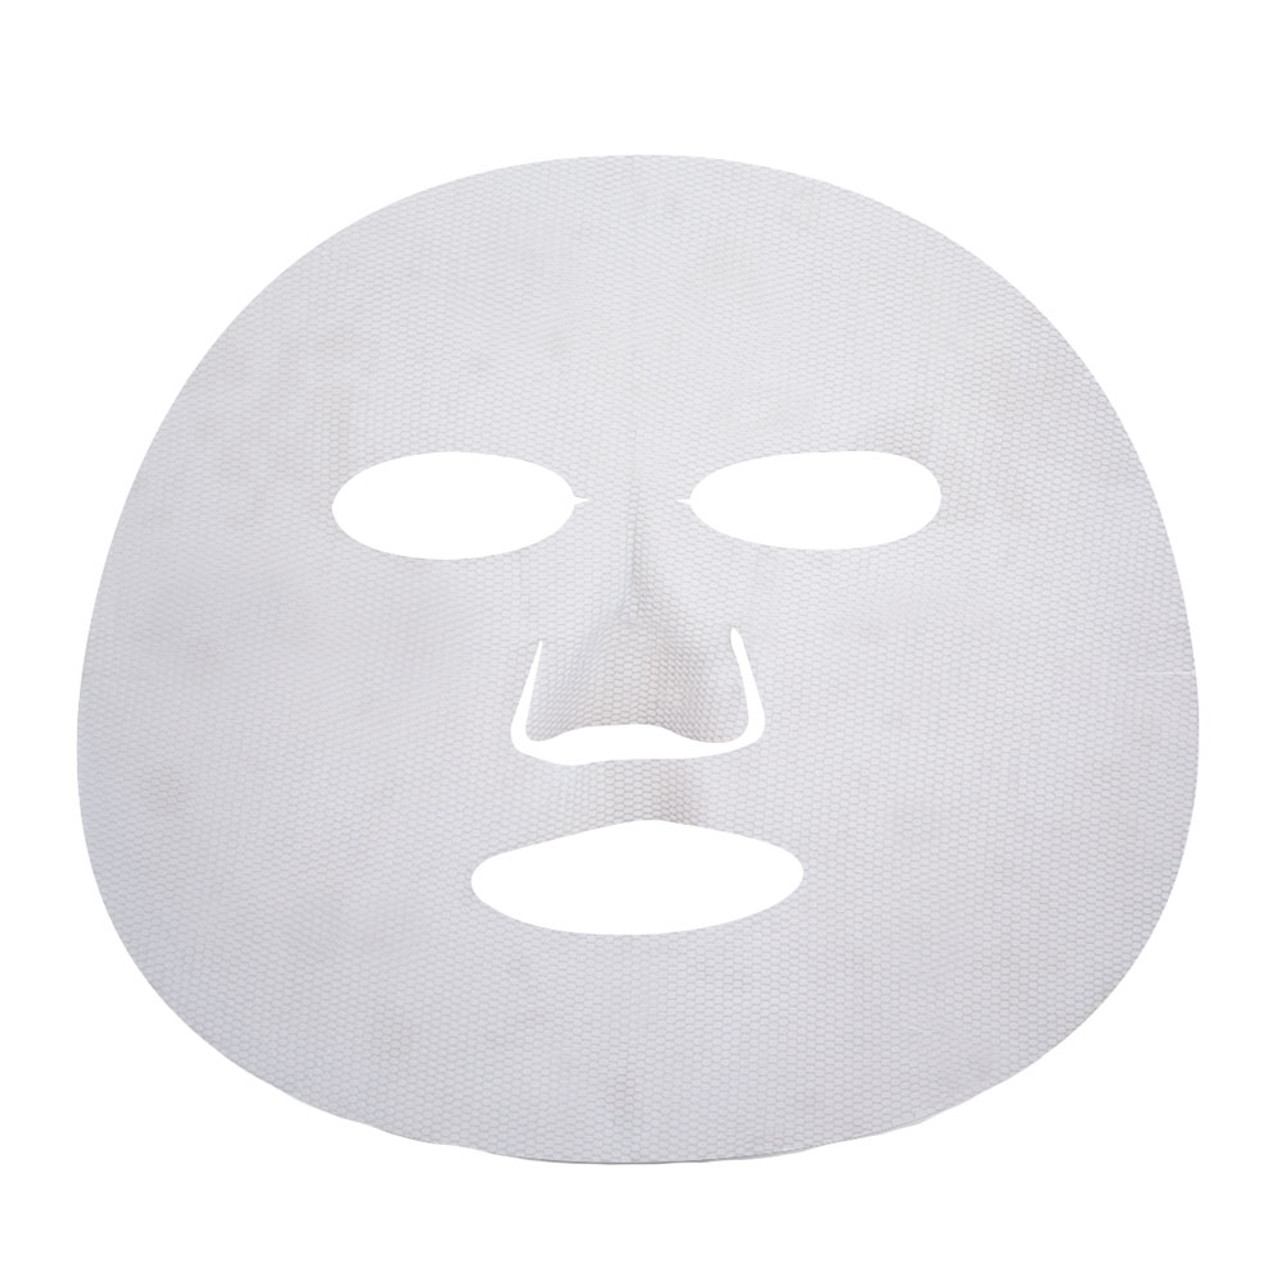 Neocutis Neo Restore Post Treatment Nourishing Mask (6-Pk) BeautifiedYou.com